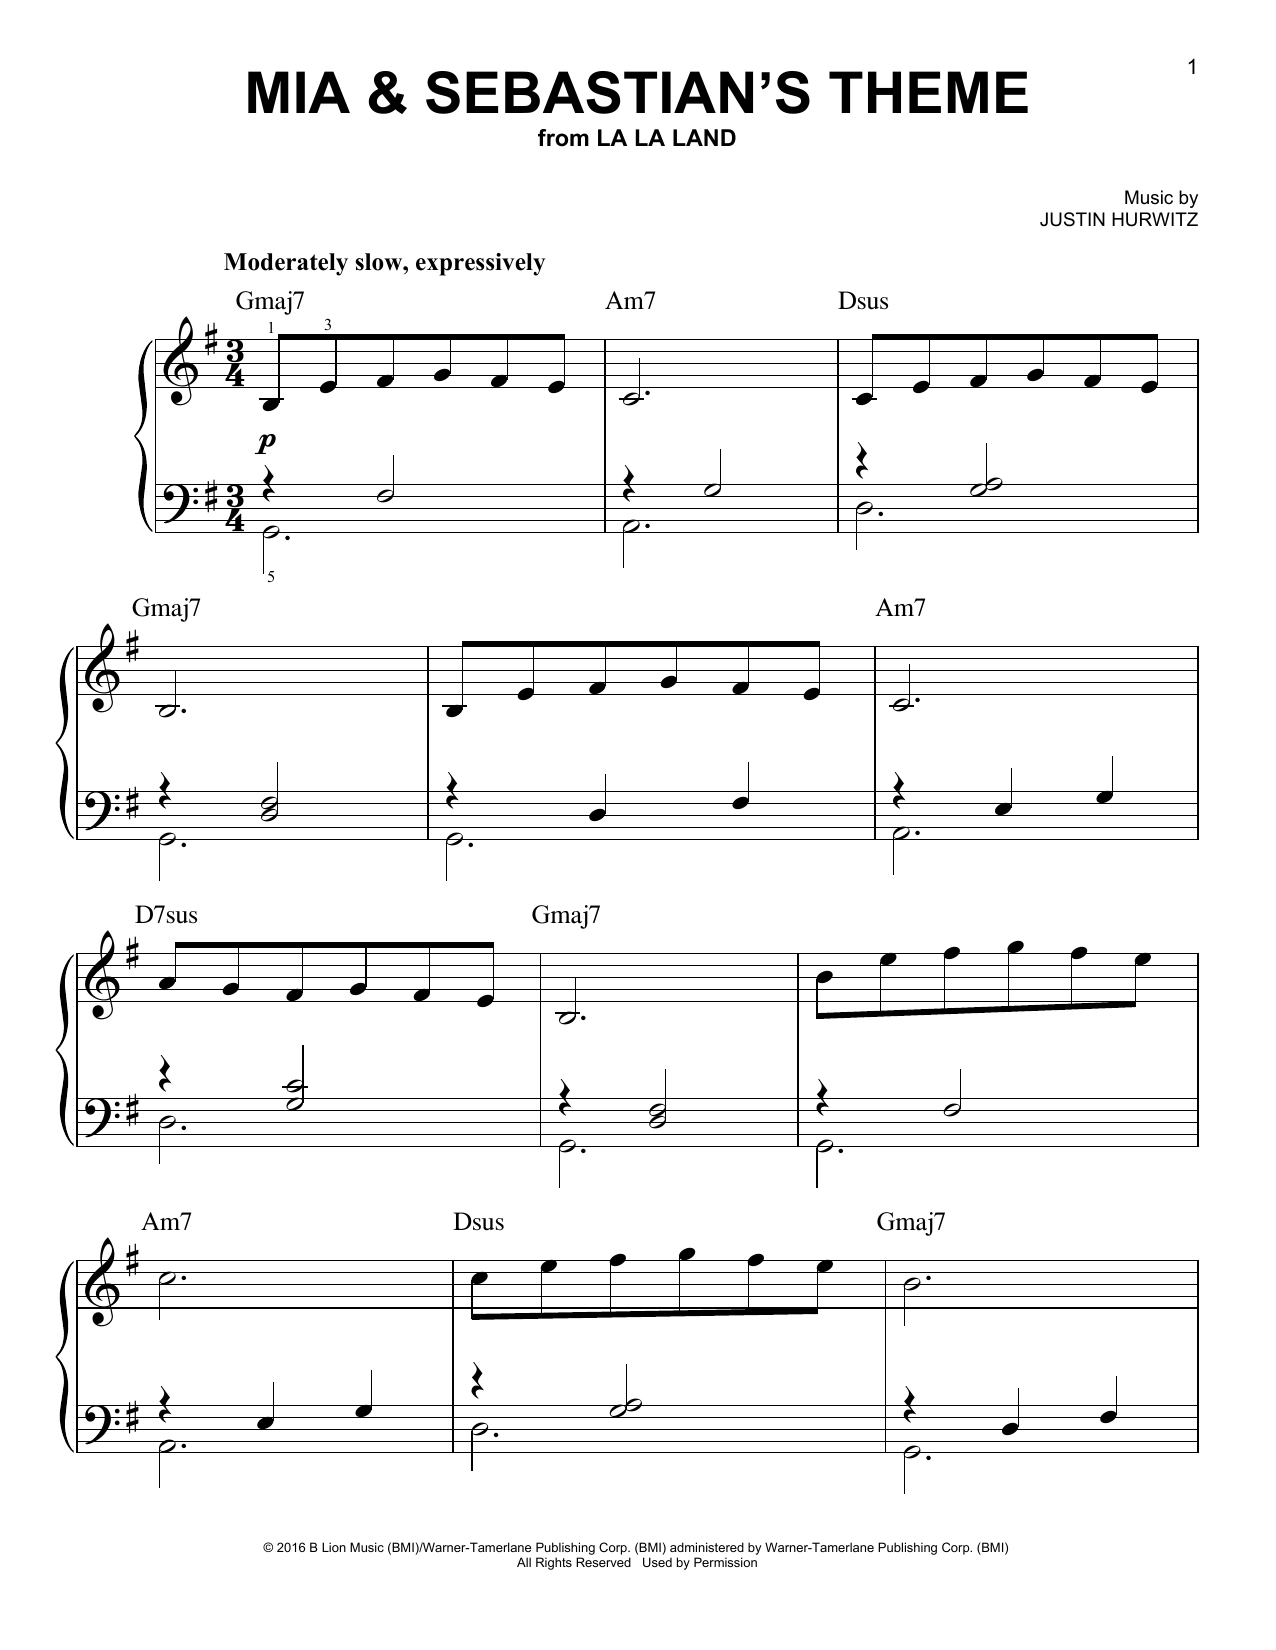 Justin Hurwitz Mia & Sebastian's Theme (from La La Land) sheet music notes and chords arranged for Clarinet and Piano